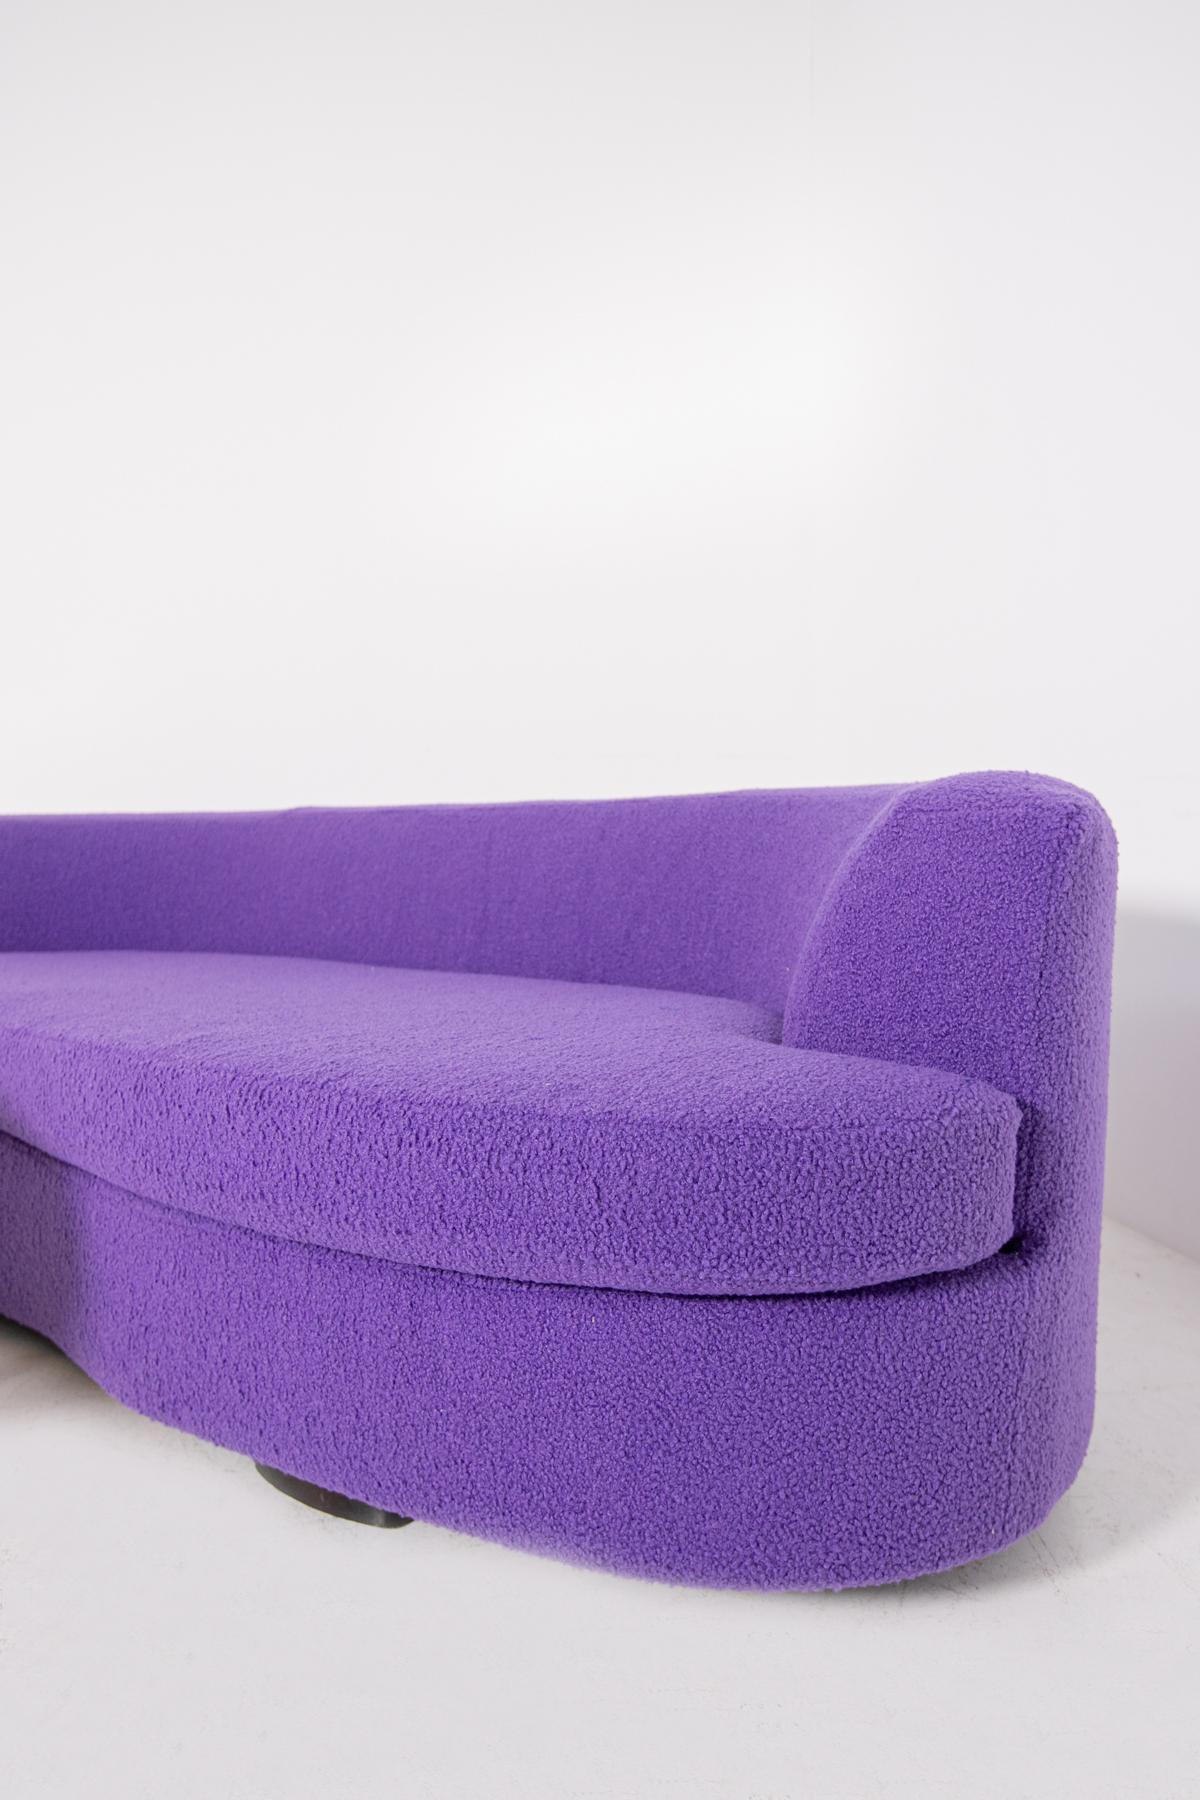 Italian Curved Sofa in Purple Bouclè, 1960s 6